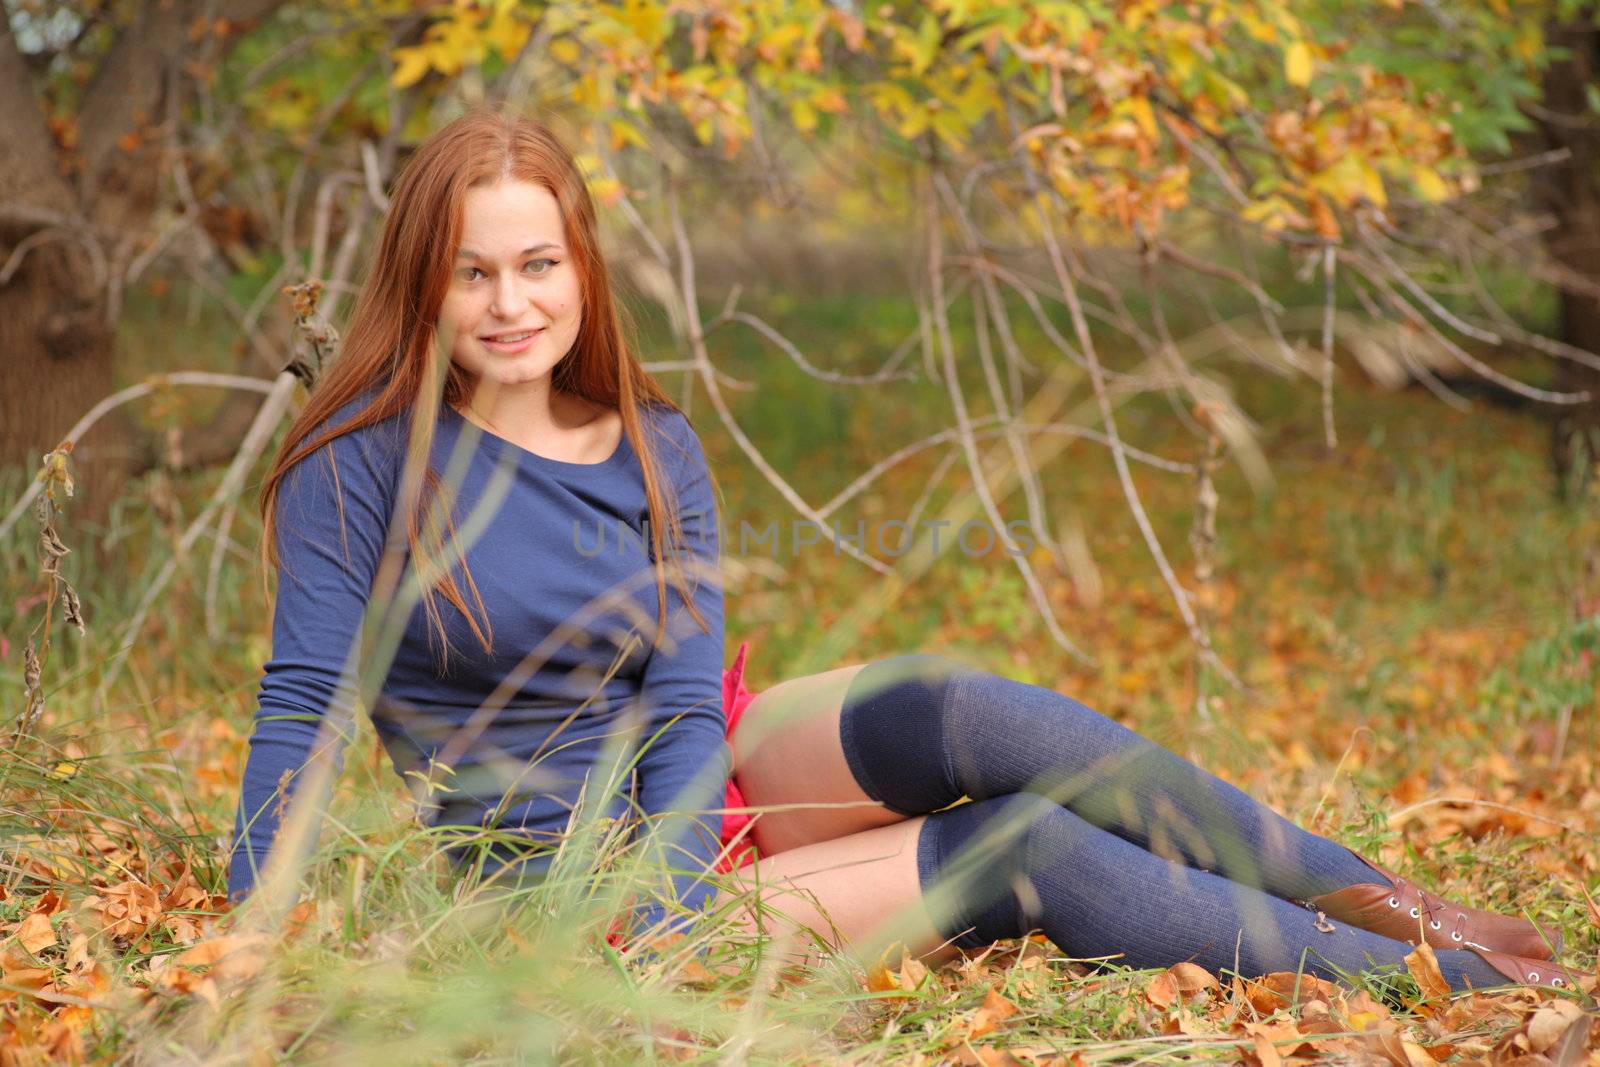 romantic girl sitting in autumn leaves by mettus